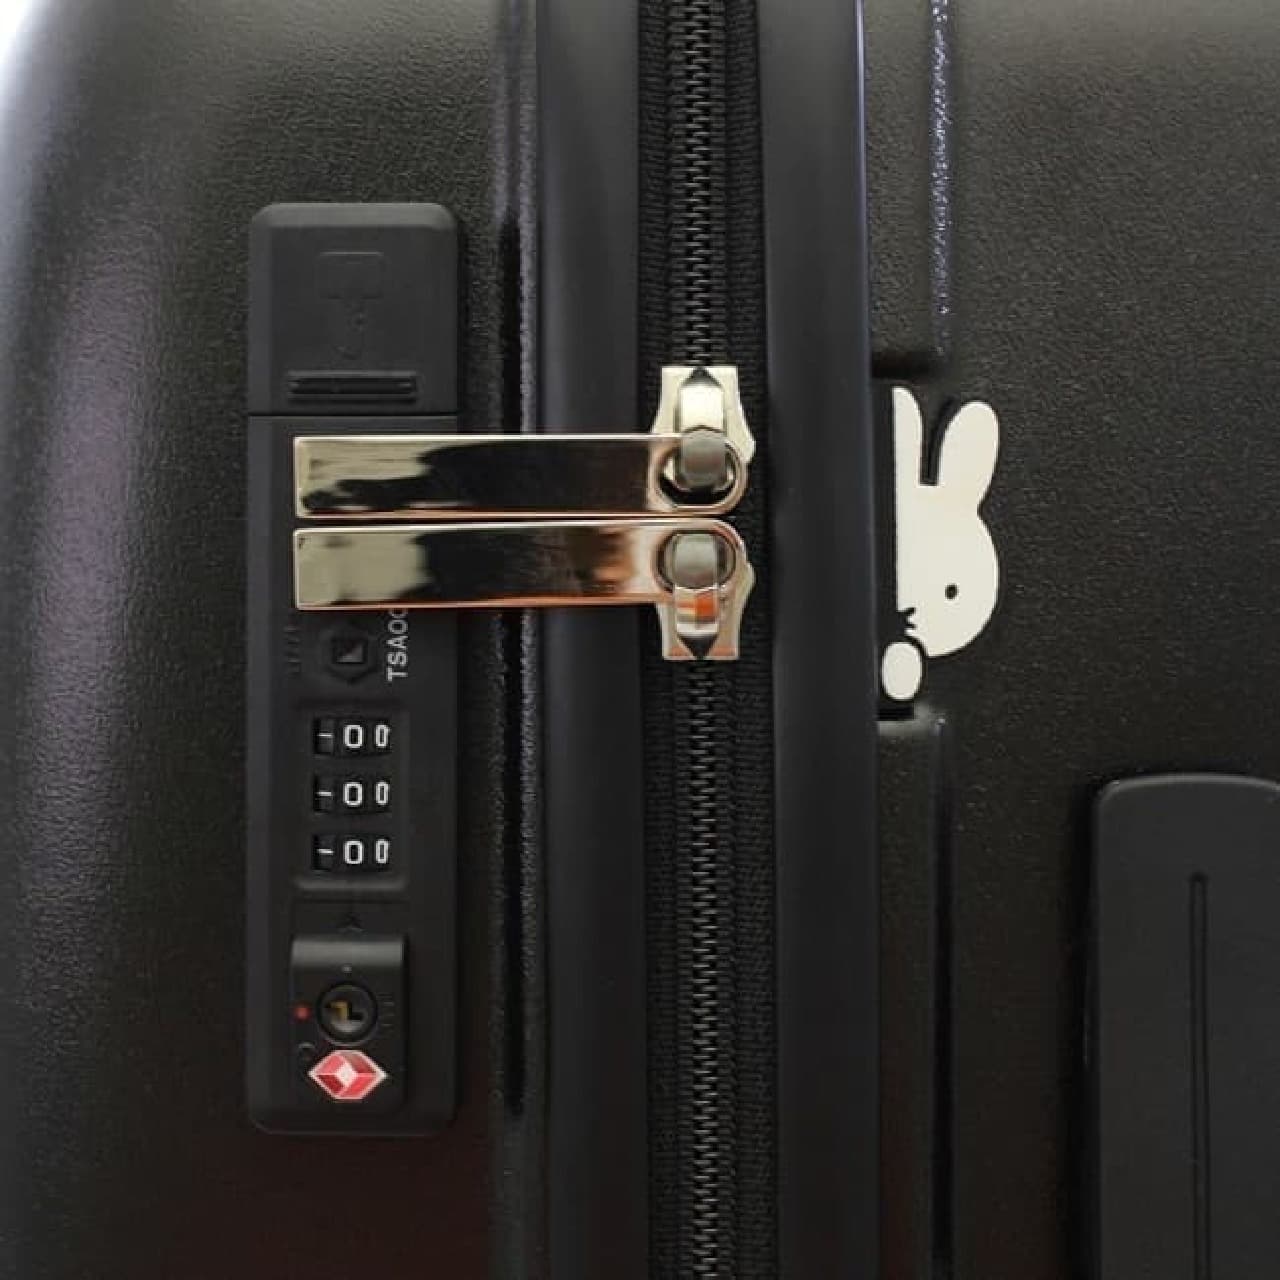 Miffy pattern suitcase in Villevan --Zipper is also cute